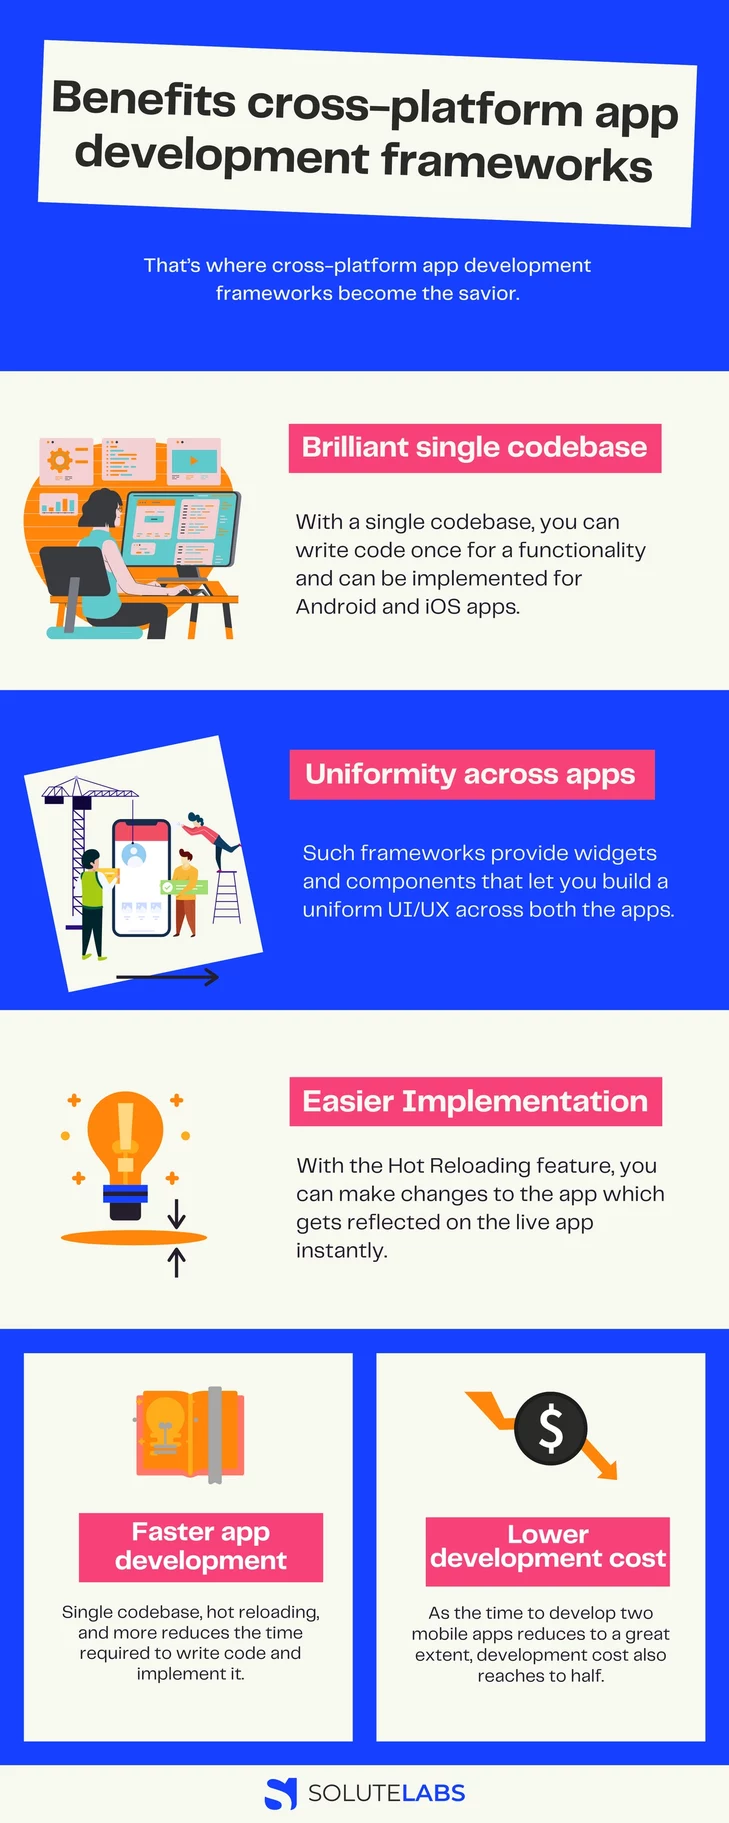 Benefits cross-platform app development frameworks